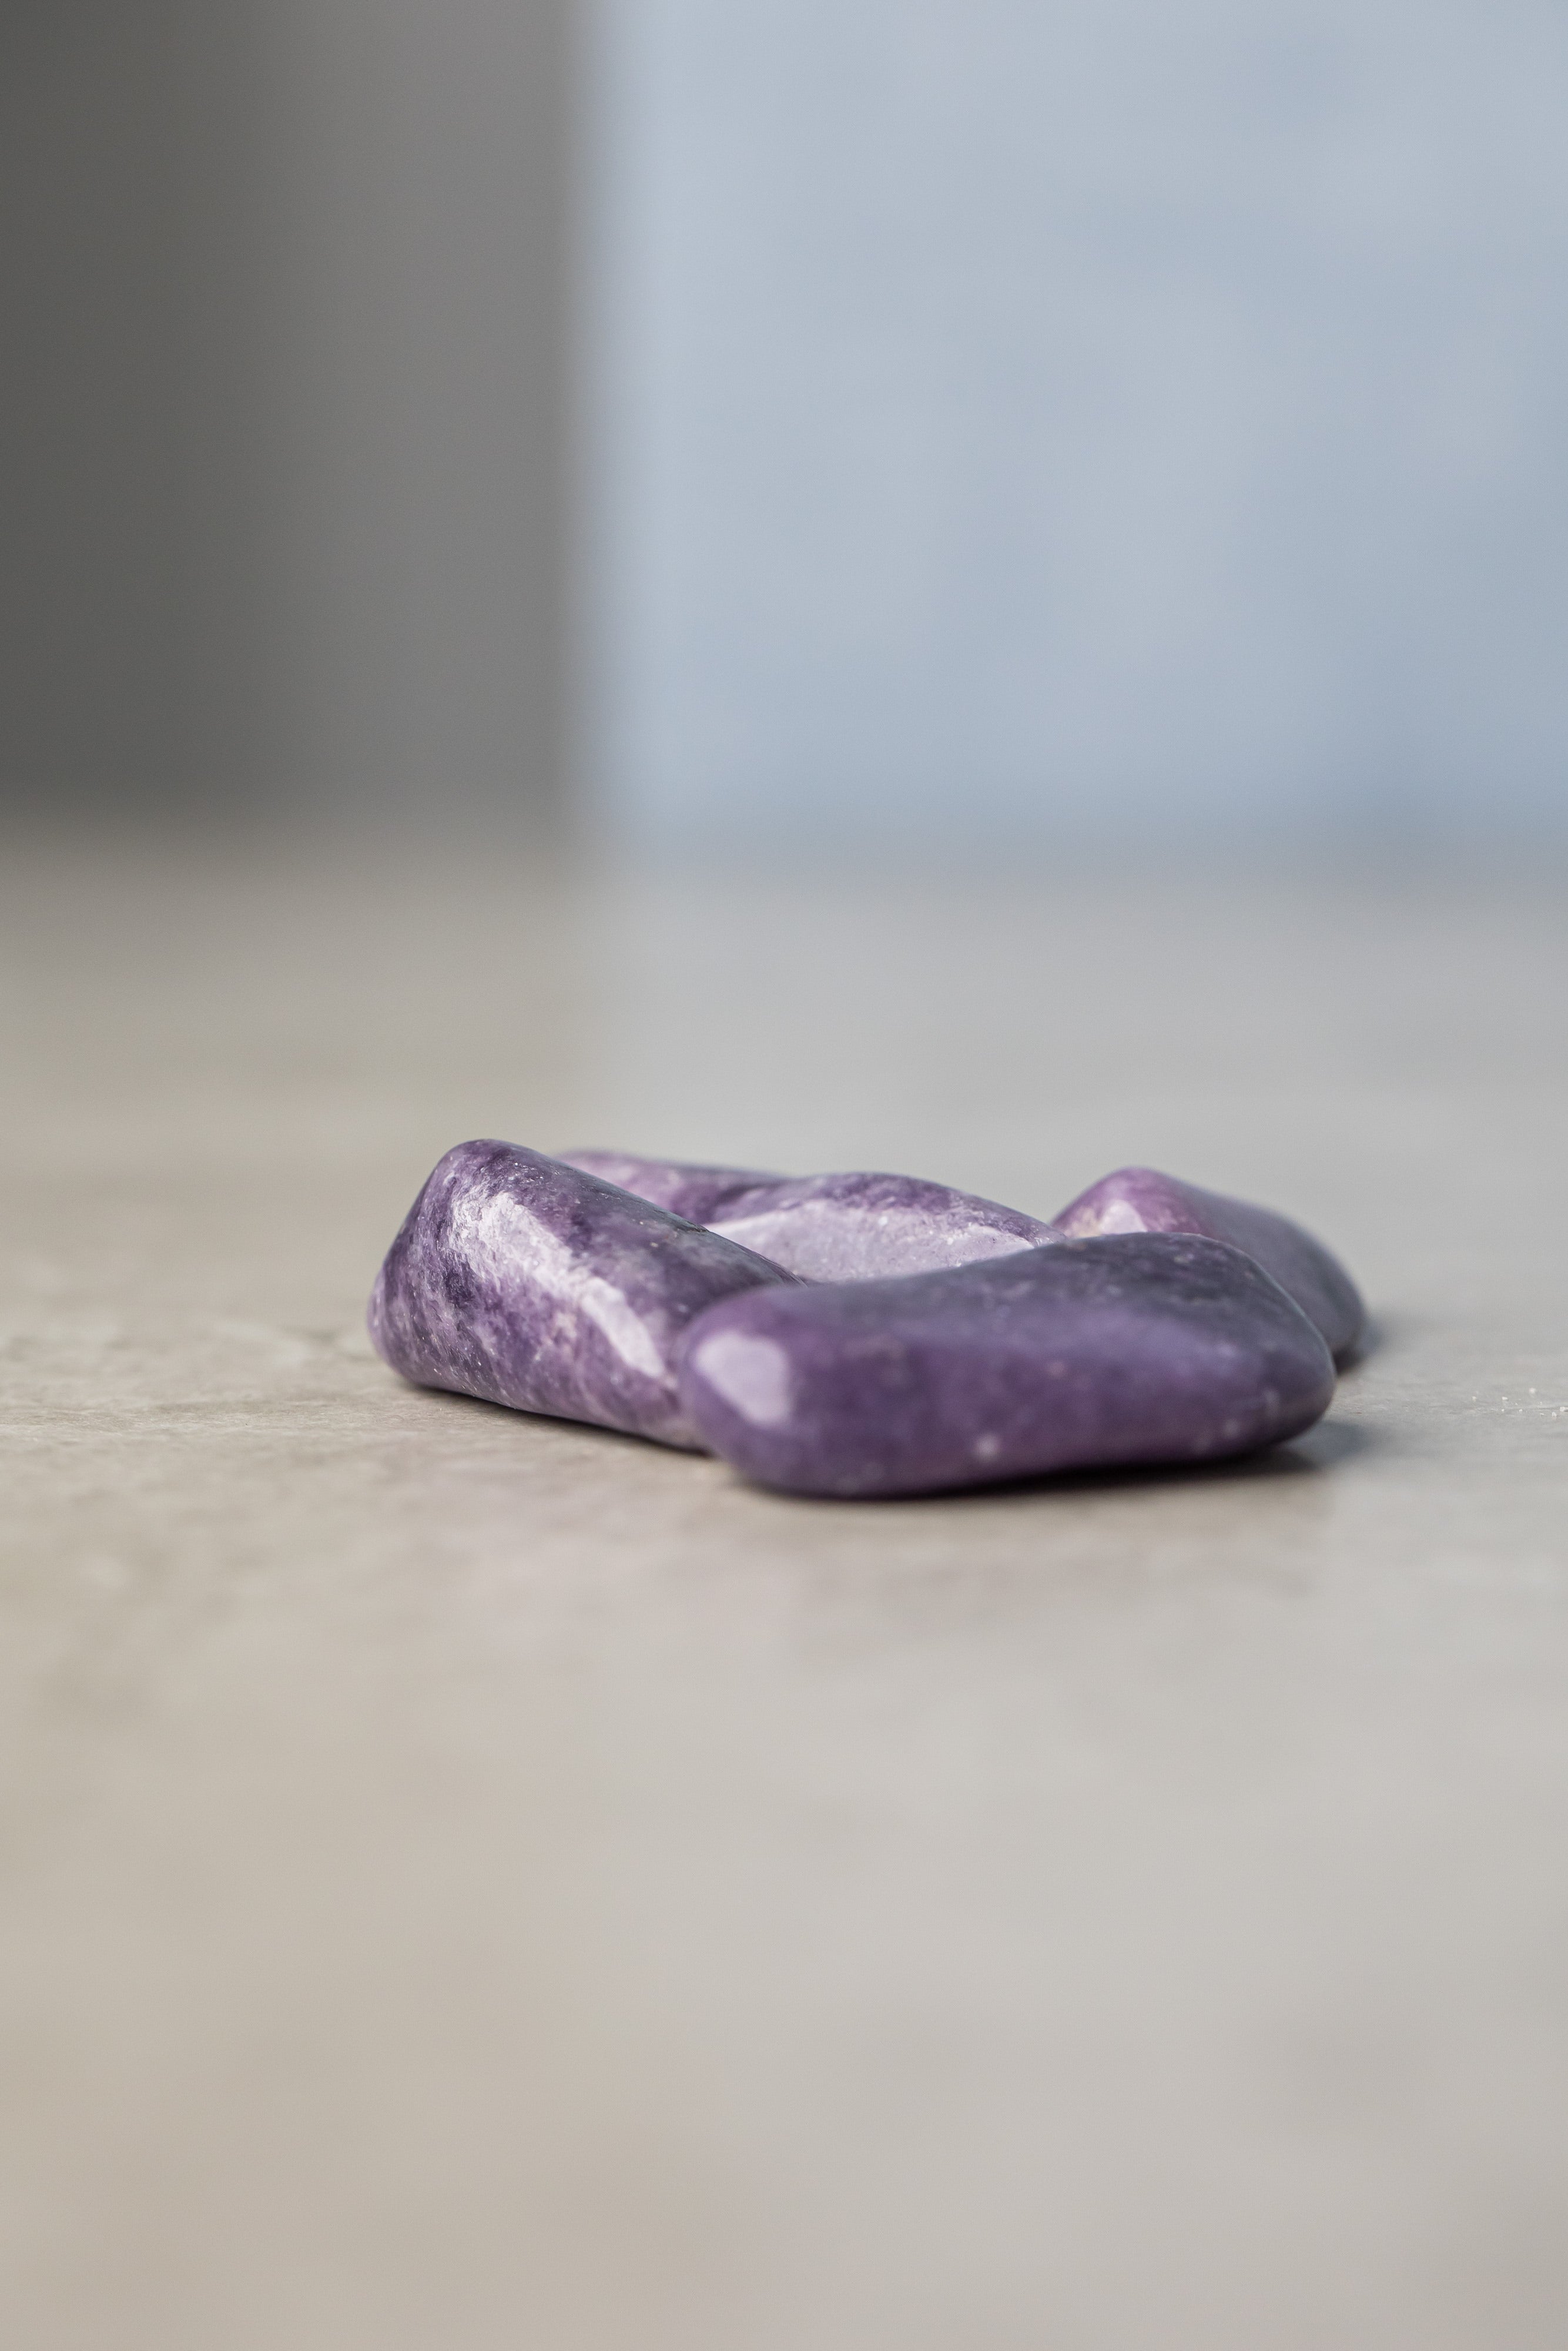 Unicorn Stone - Enchanting Crystal for Inspiration and Creativity - Everyday Rocks